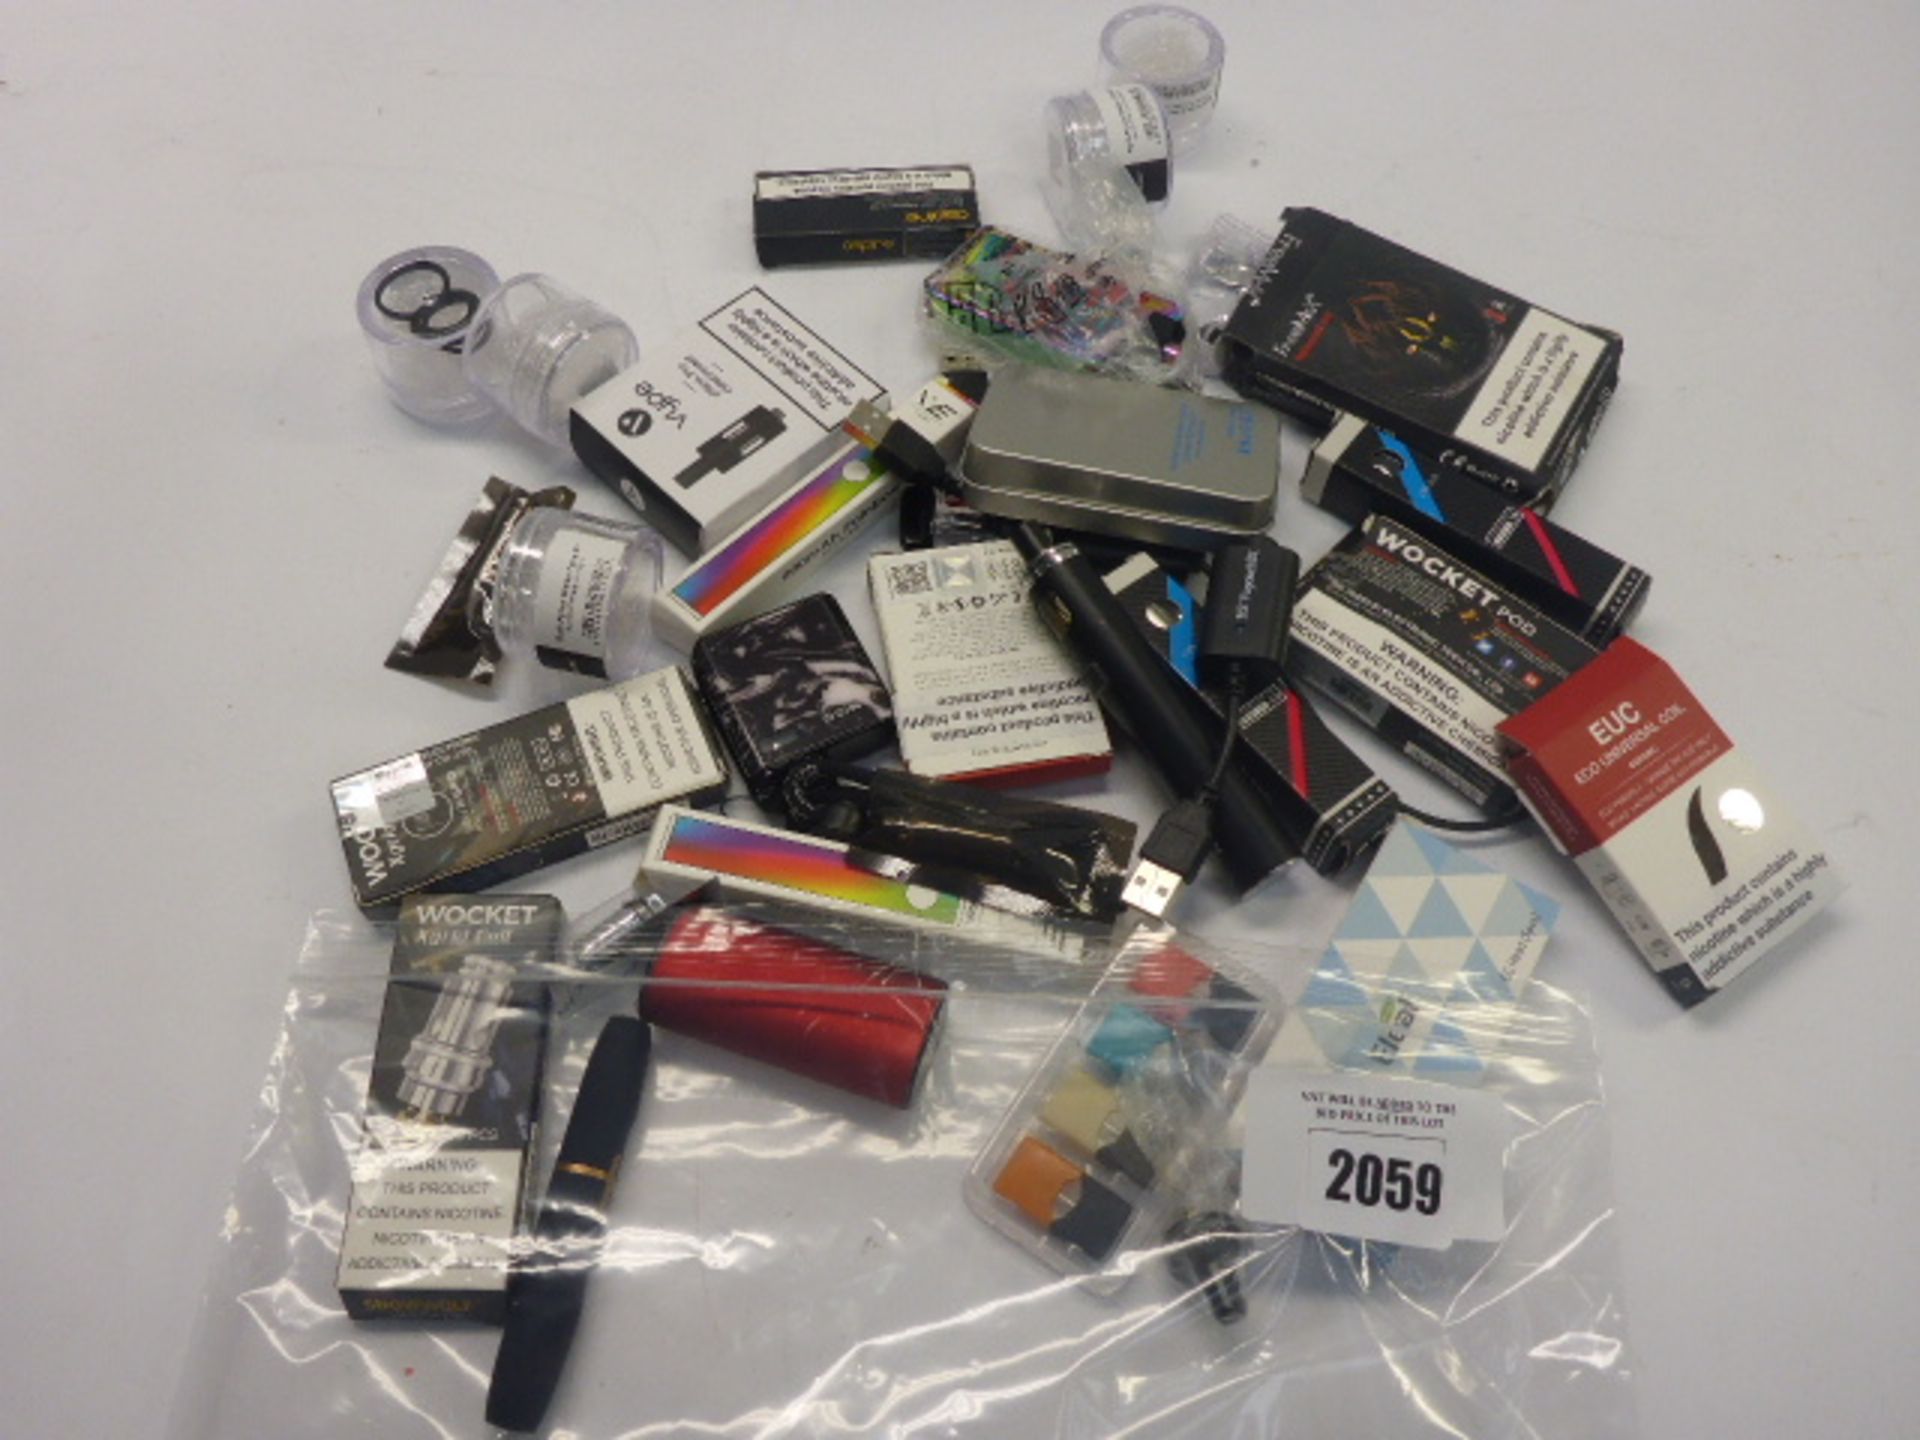 Bag of Vaping kit accessories, Smok, Aspire, ETC.